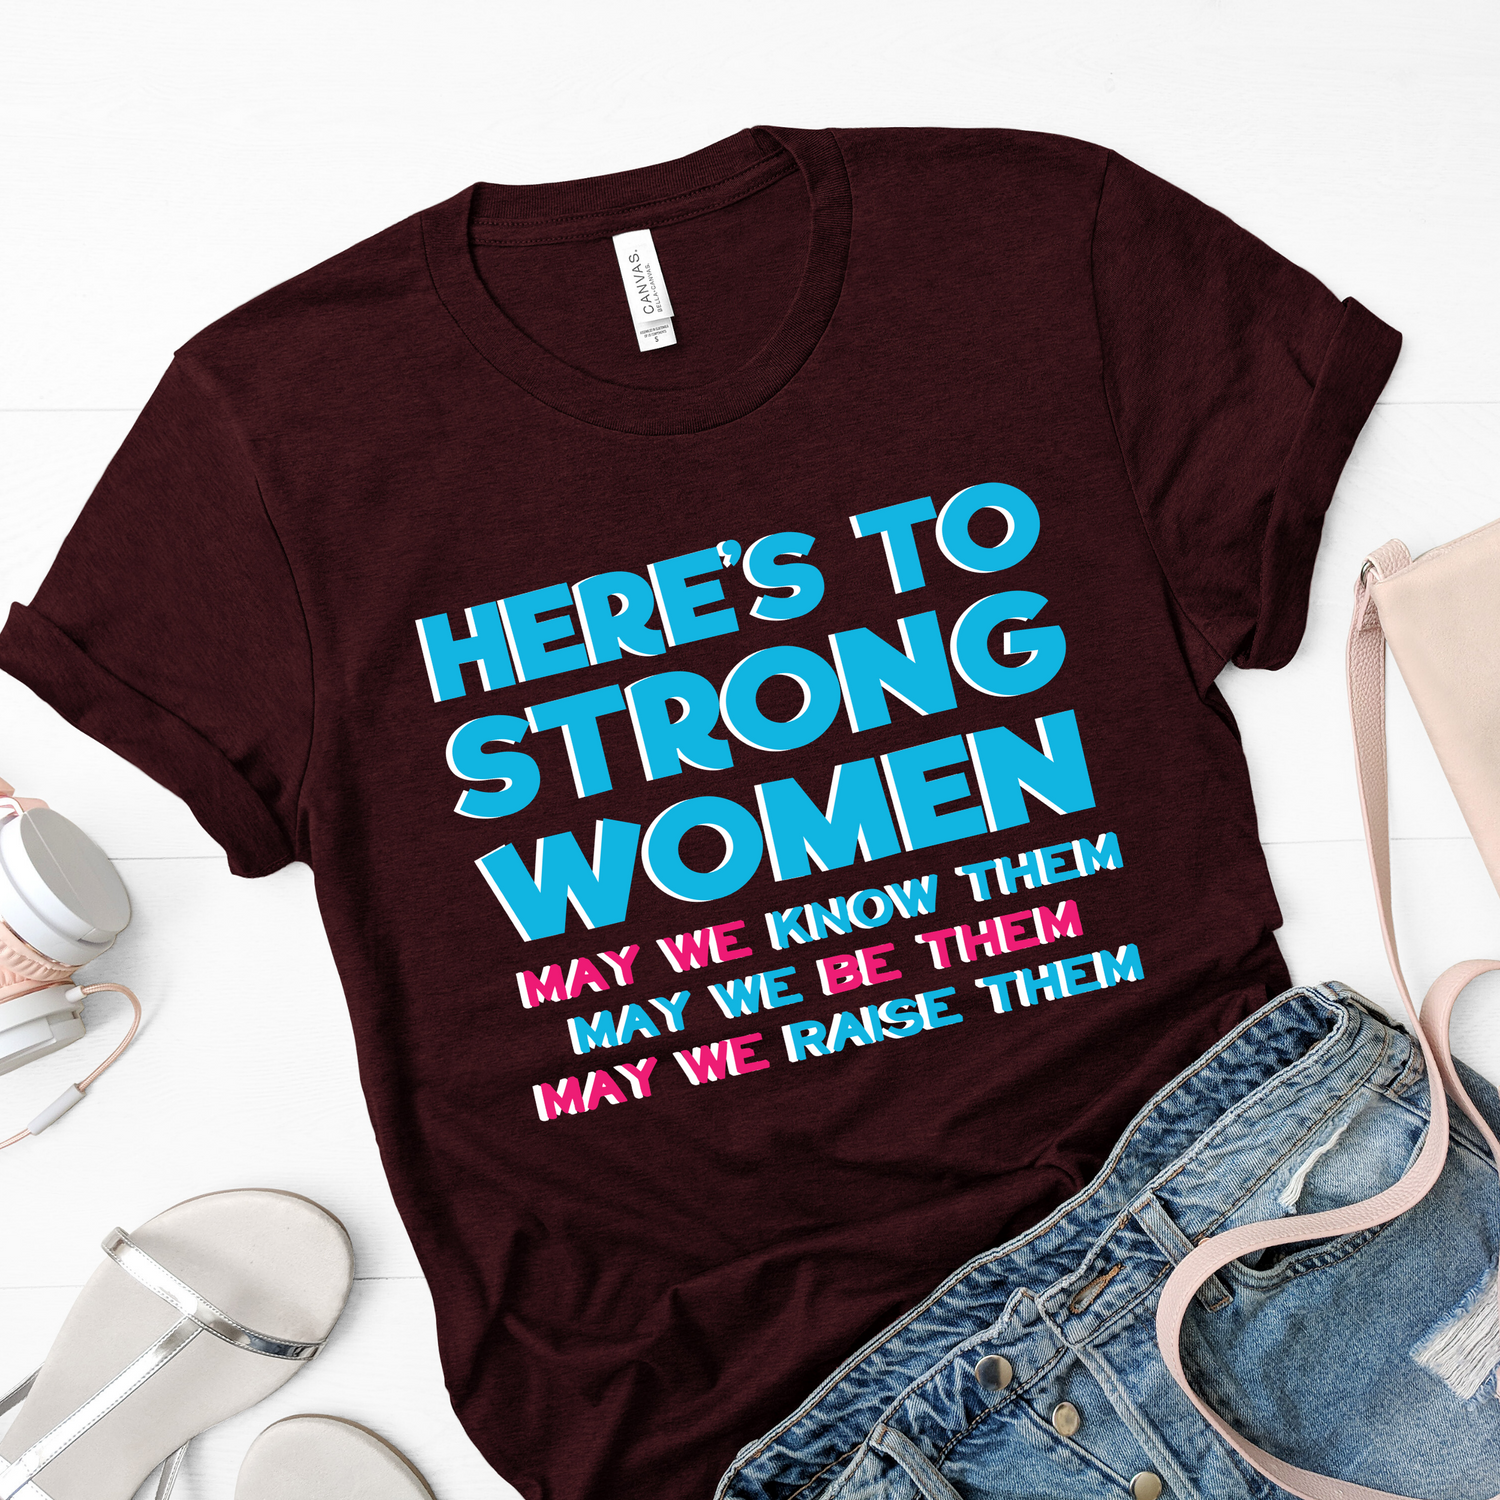 Here's To Strong Women Girl Power Feminist Shirt - Teegarb